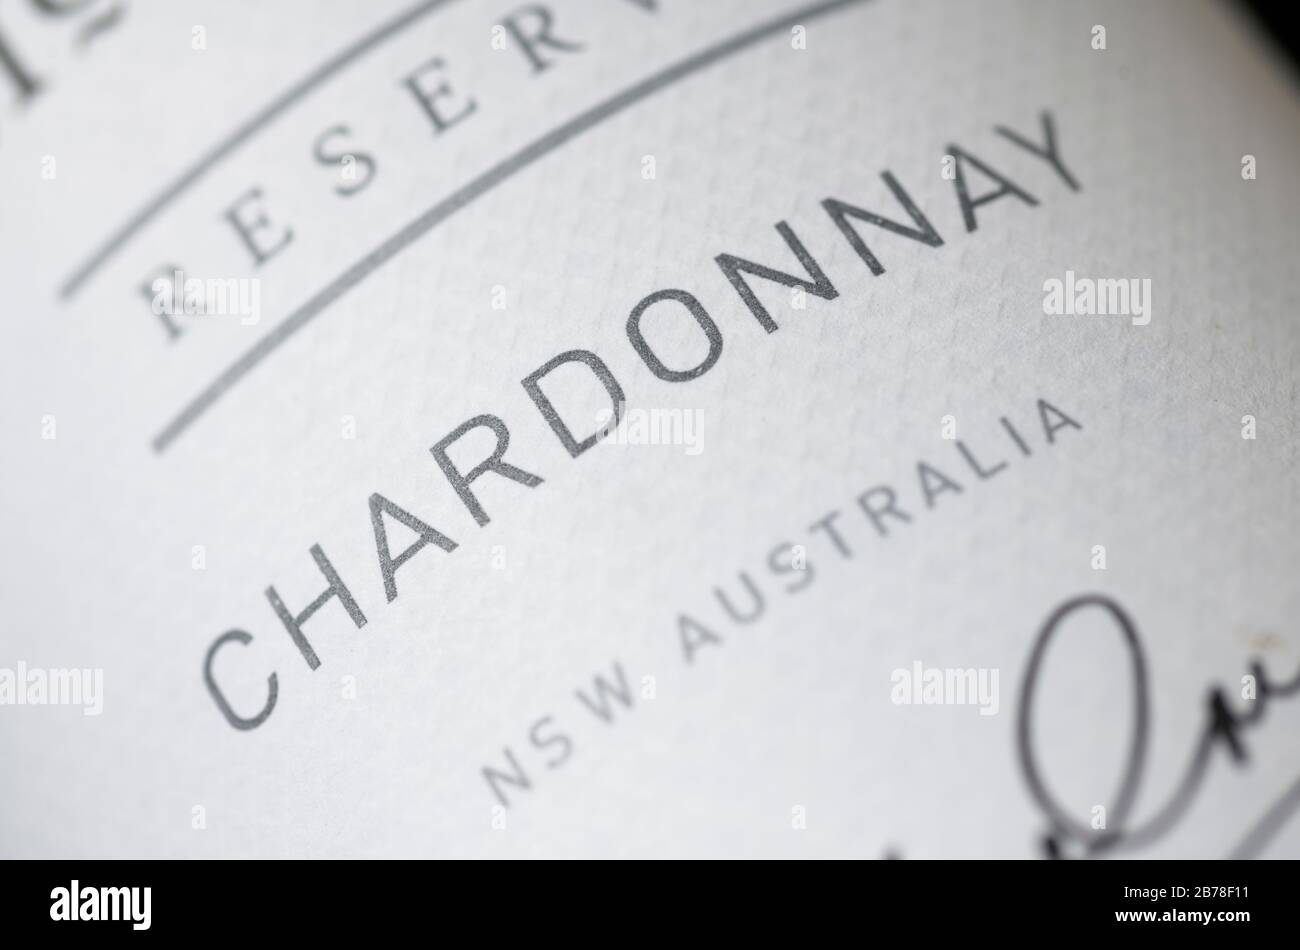 McGuigan Reserve Chardonnay Australian white wine label closeup Stock Photo